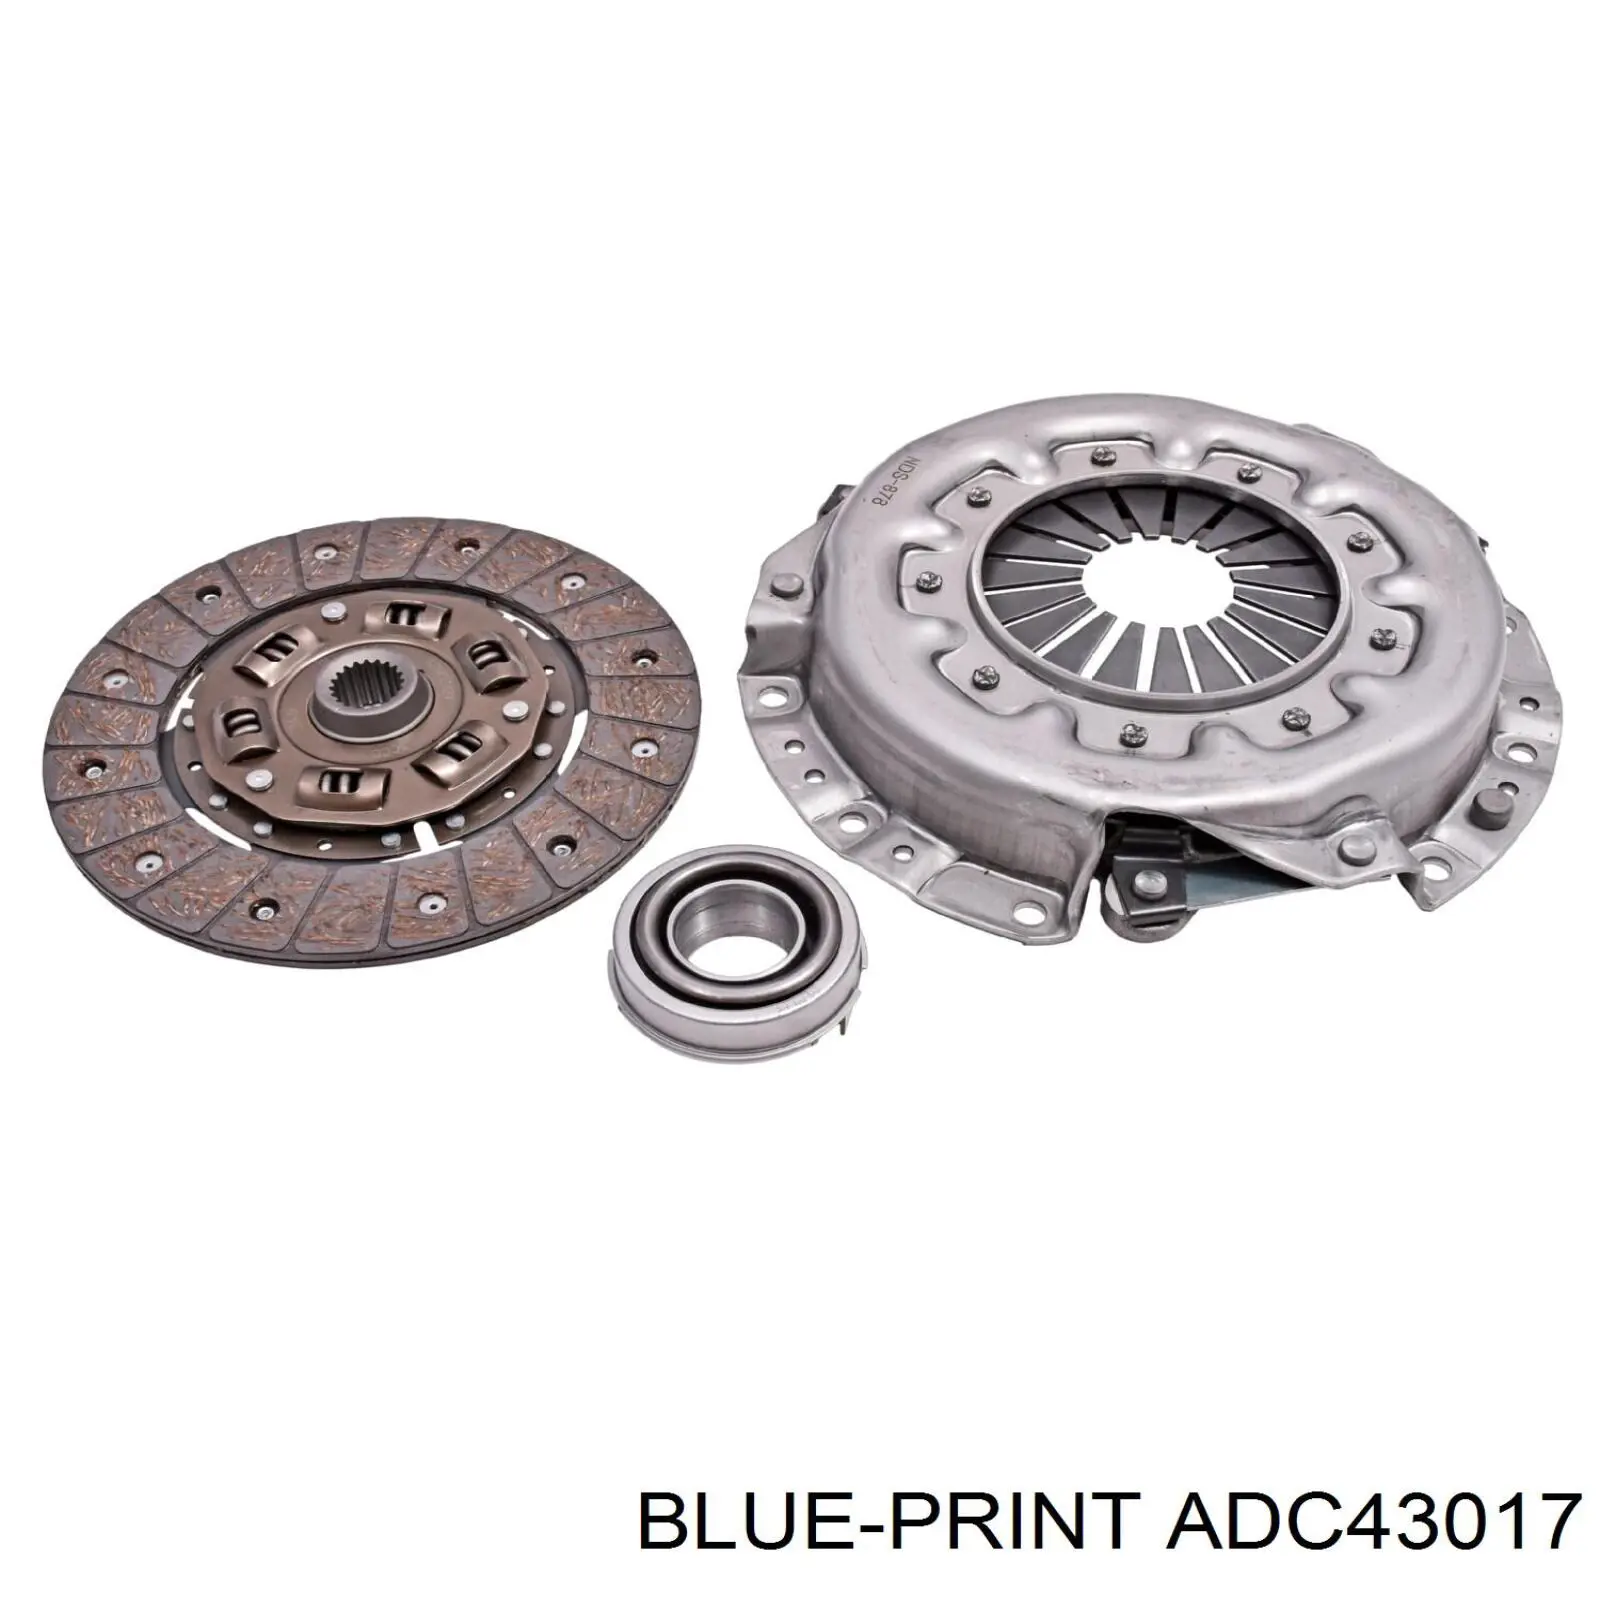 ADC43017 Blue Print embrague